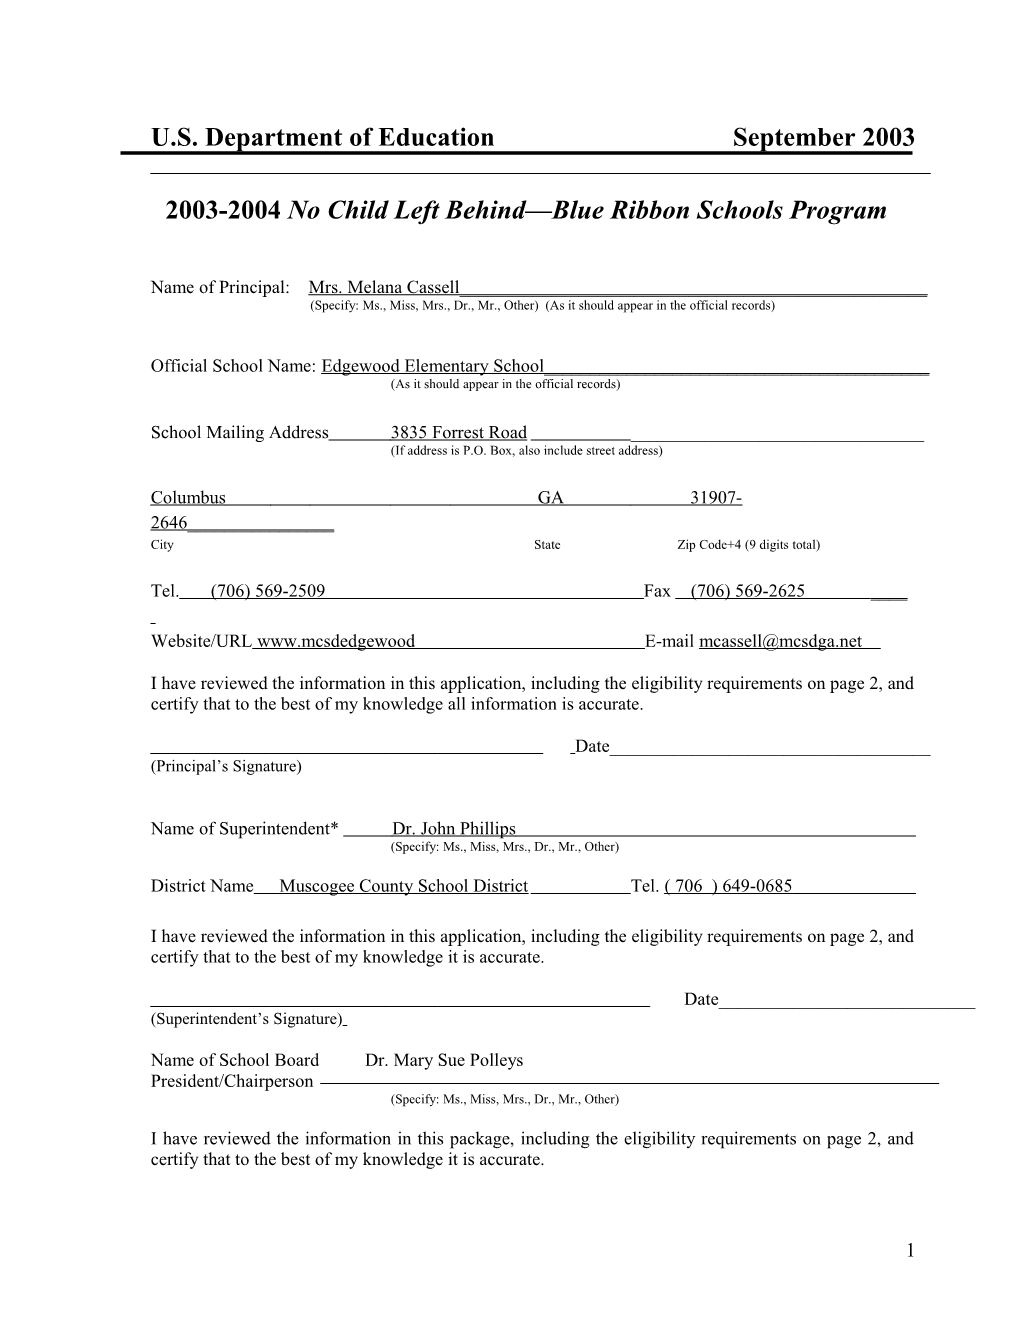 Edgewood Elementary School 2004 No Child Left Behind-Blue Ribbon School Application (Msword)